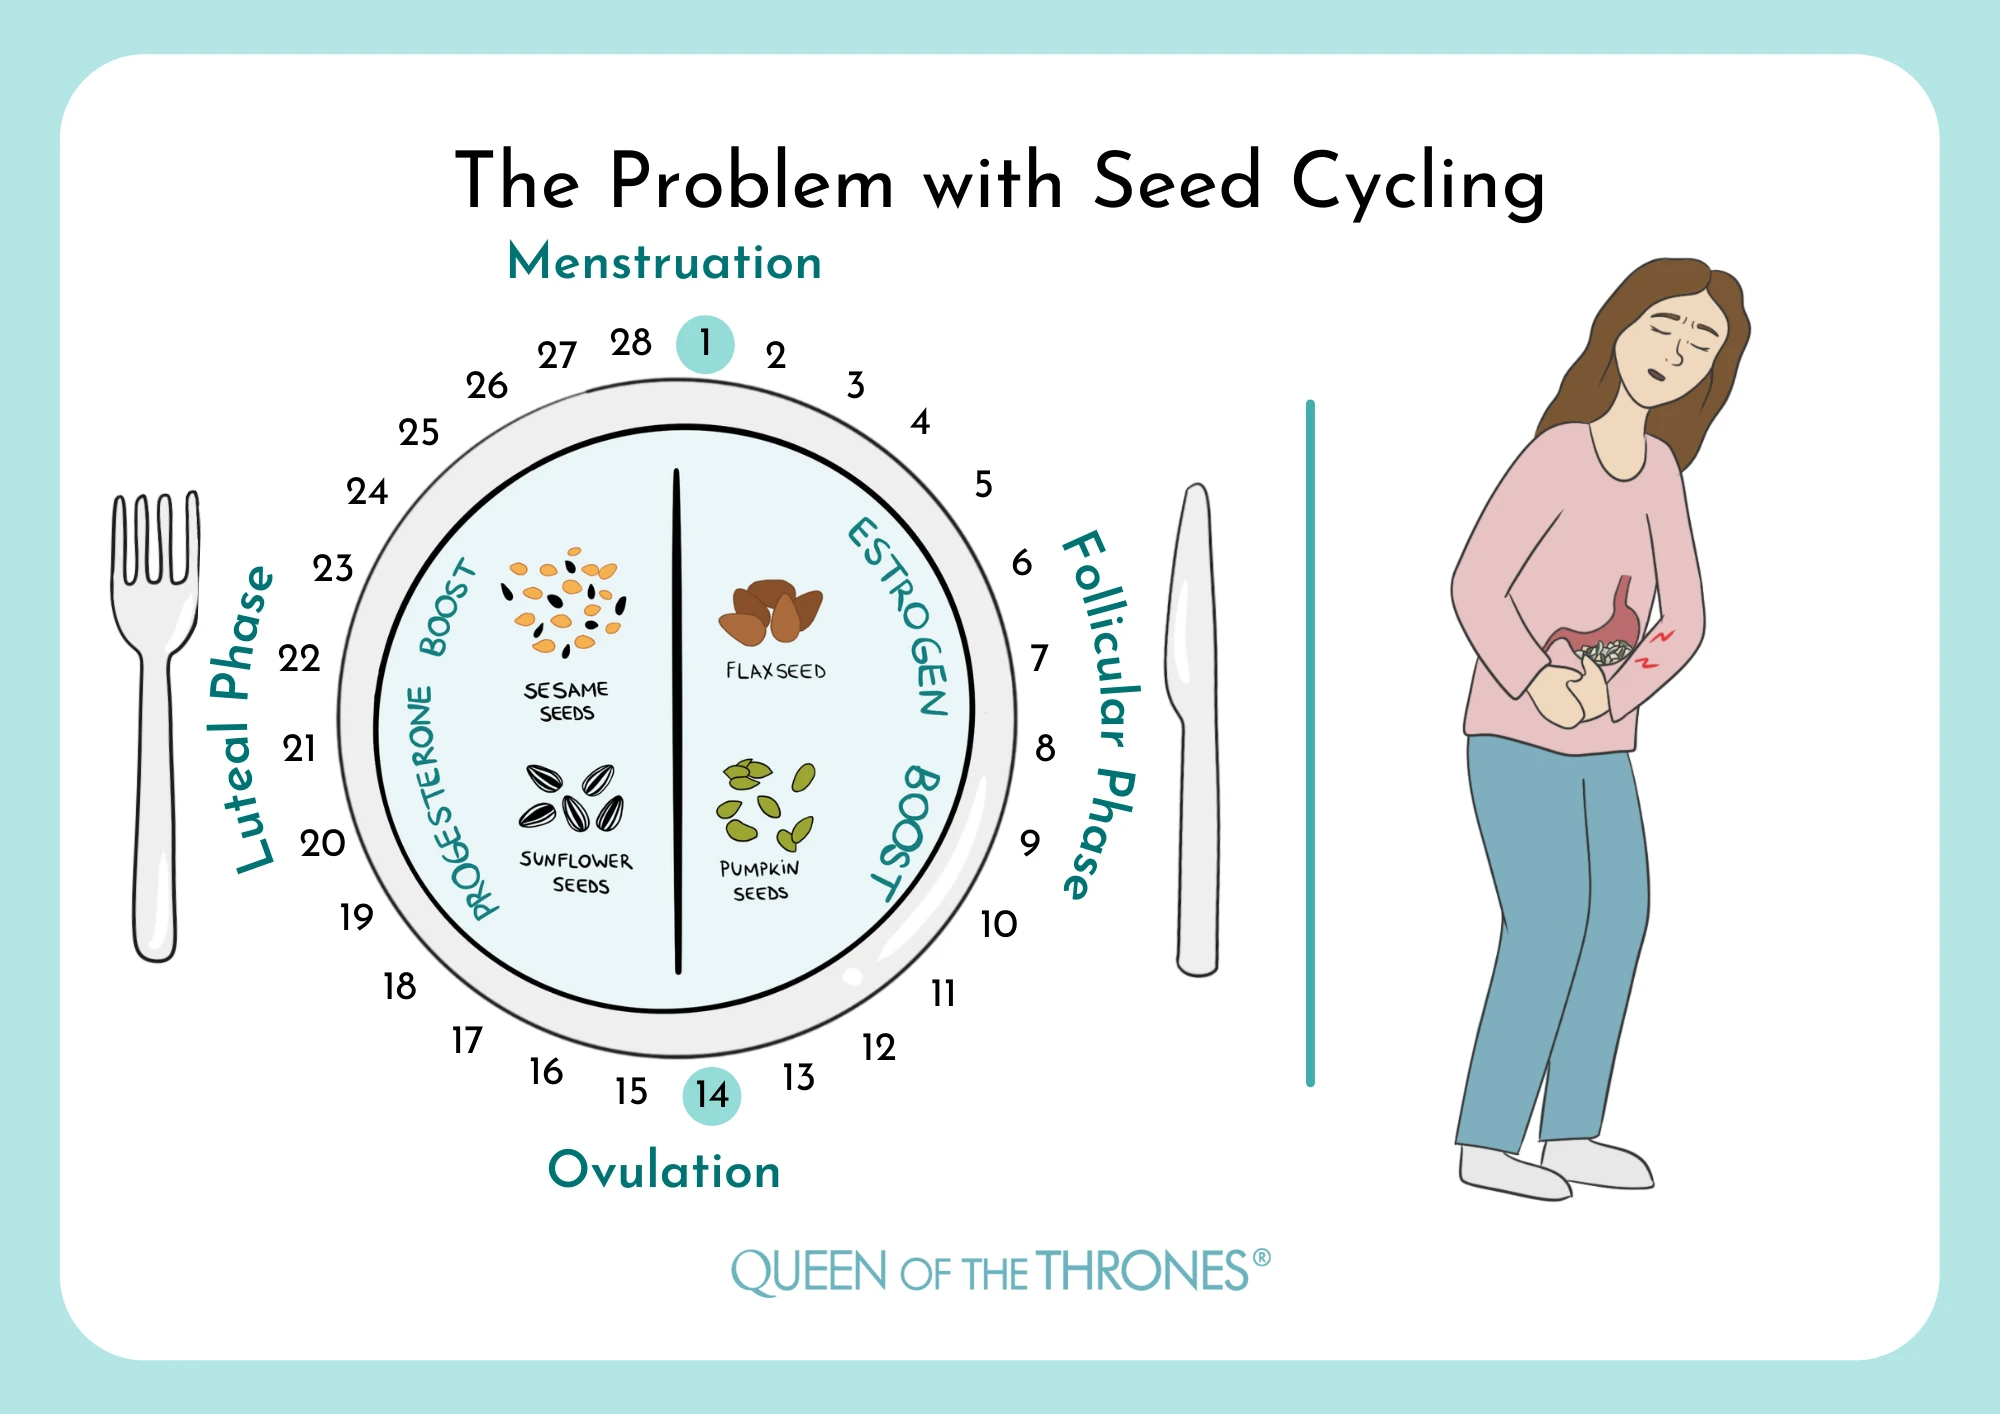 Balance your hormones with Queen of the Thrones Castor oil Packs instead of seeds